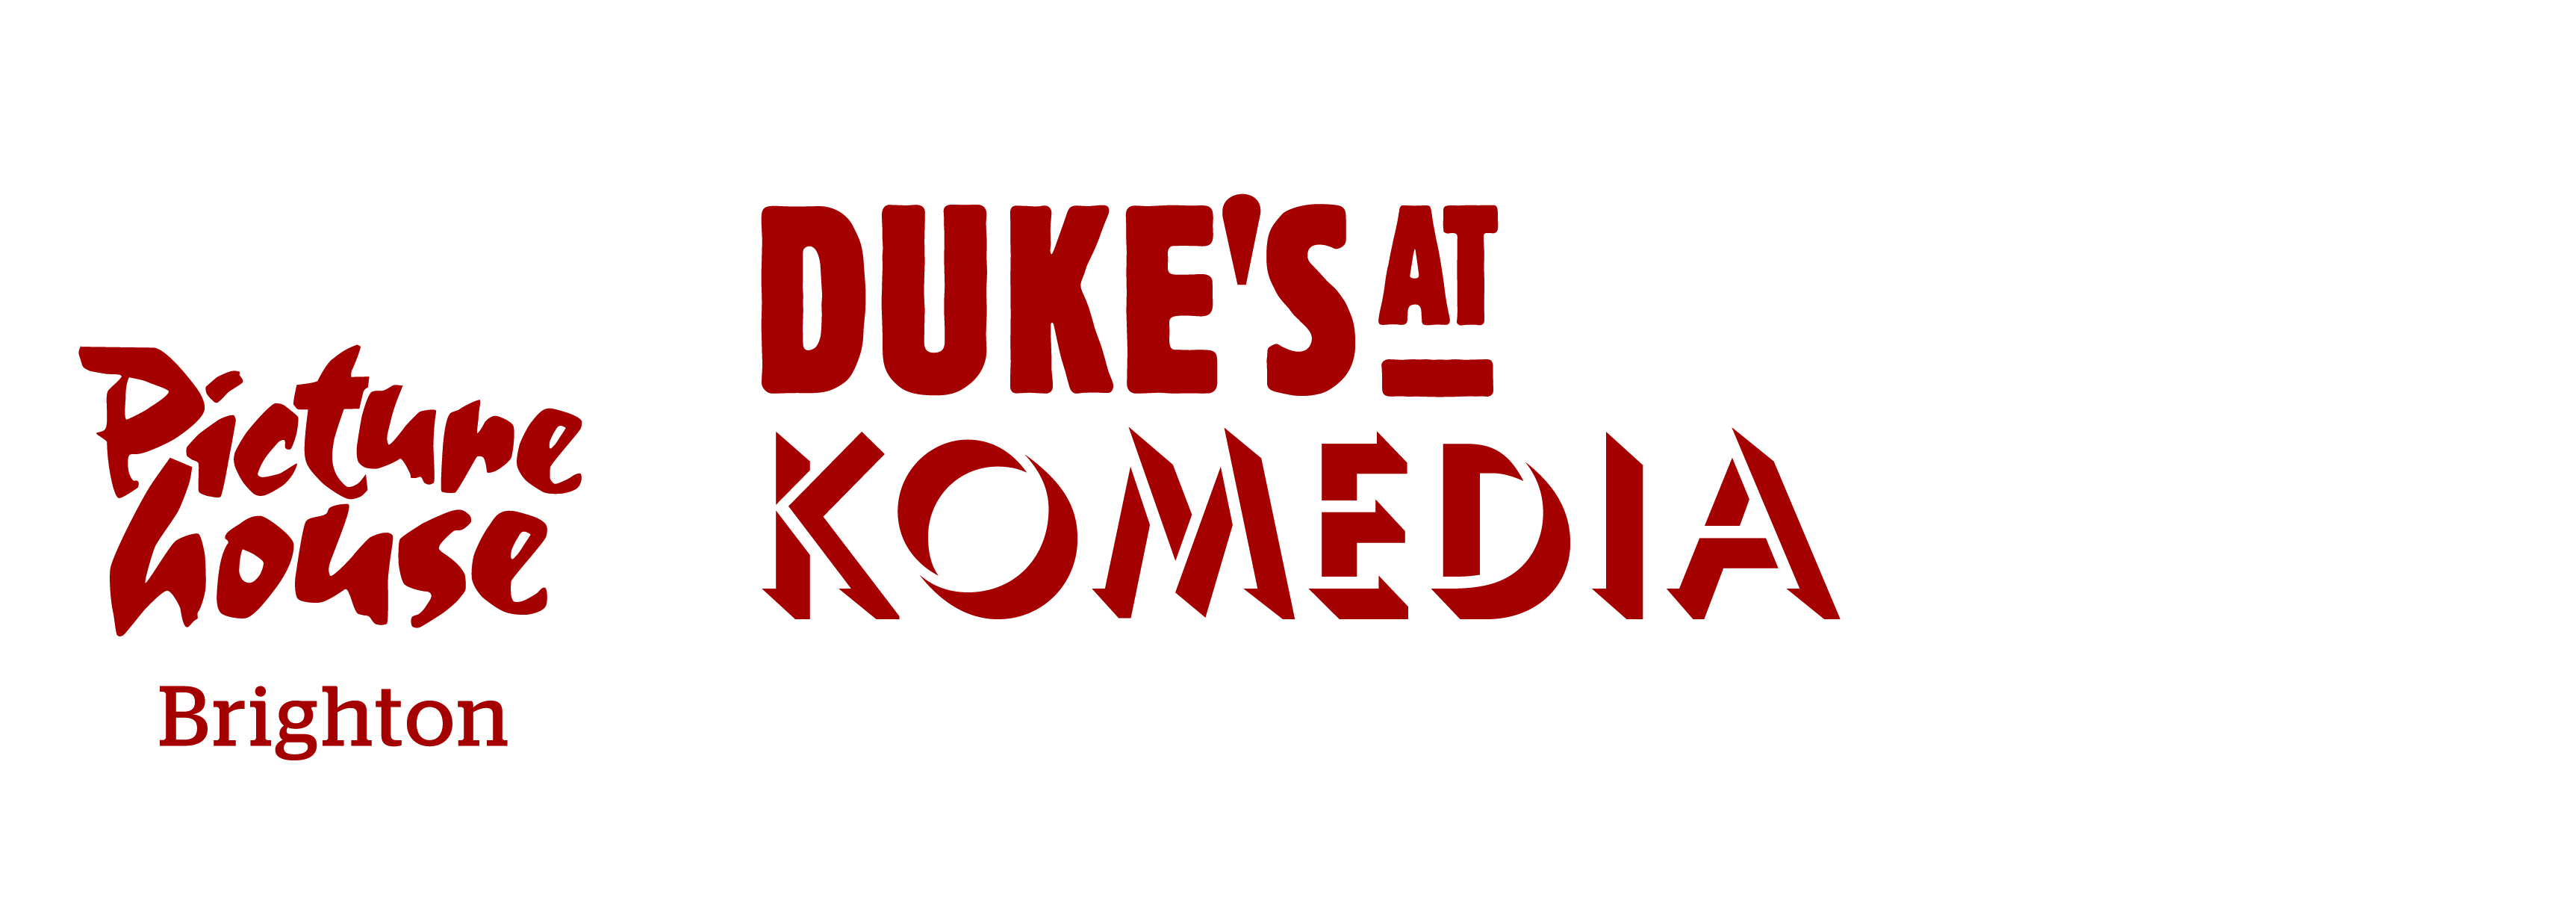 Dukes at Komedia Brighton Red Logo CMYK